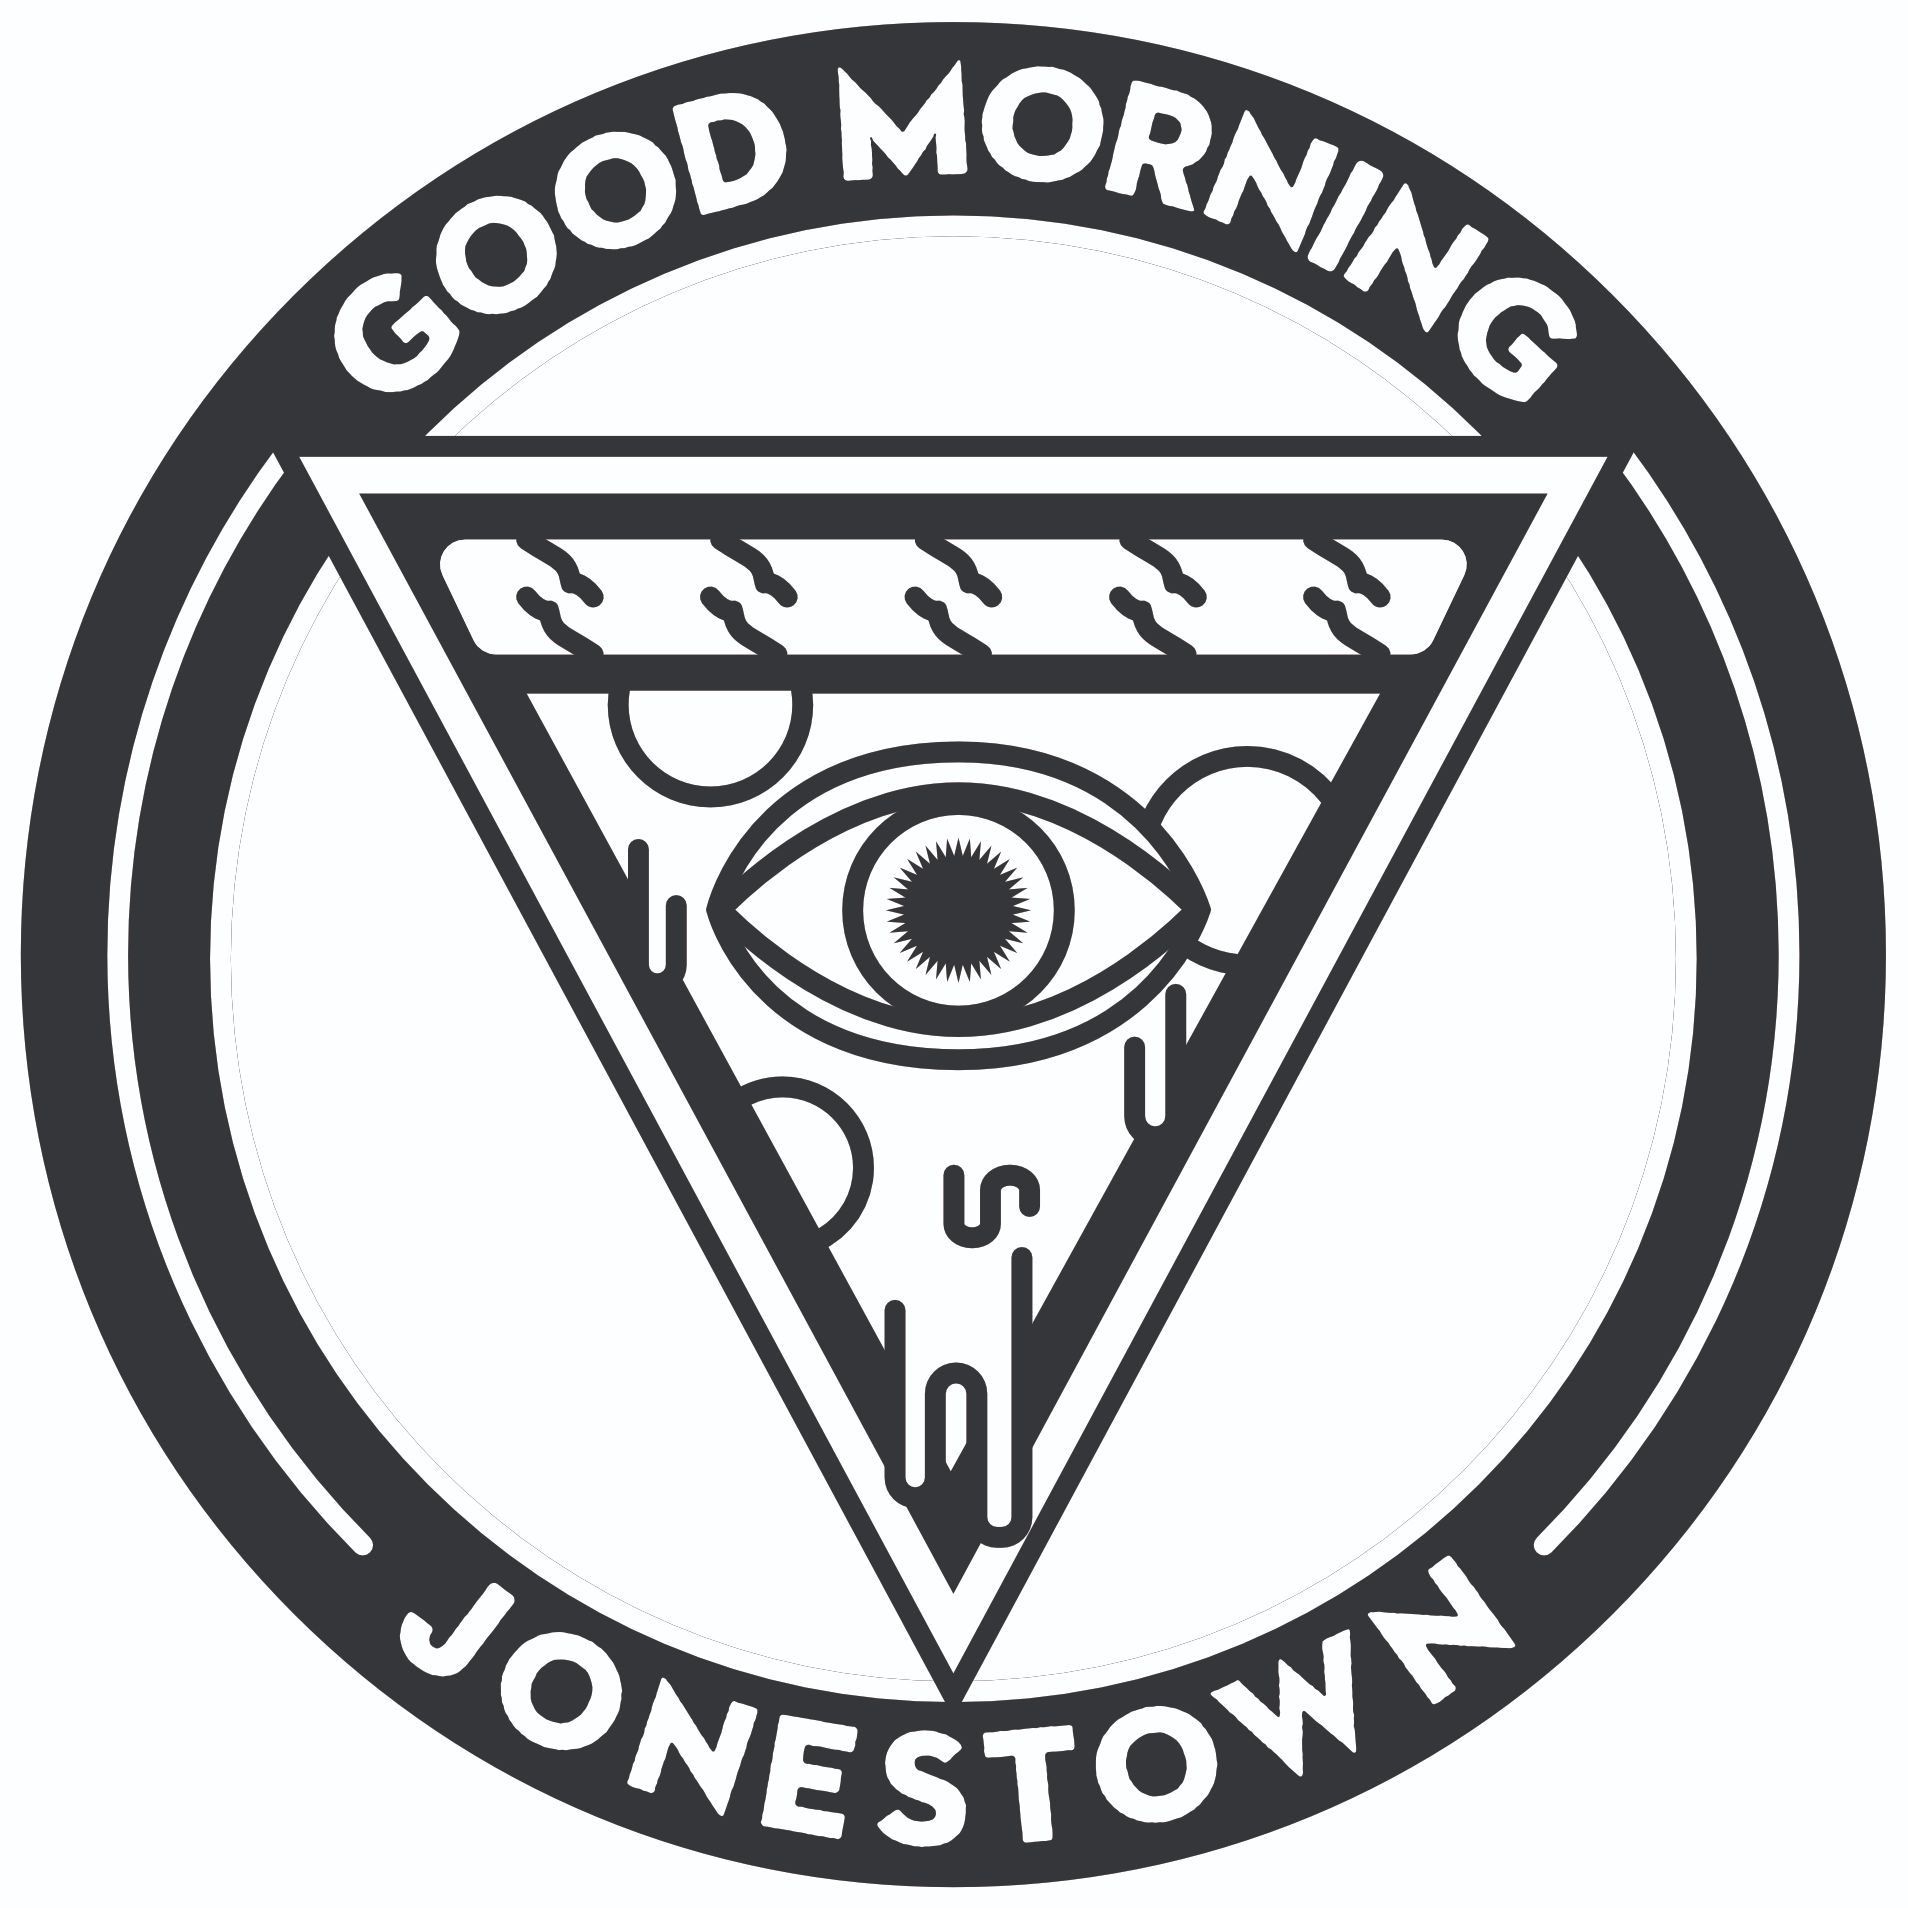 Good Morning, Jonestown